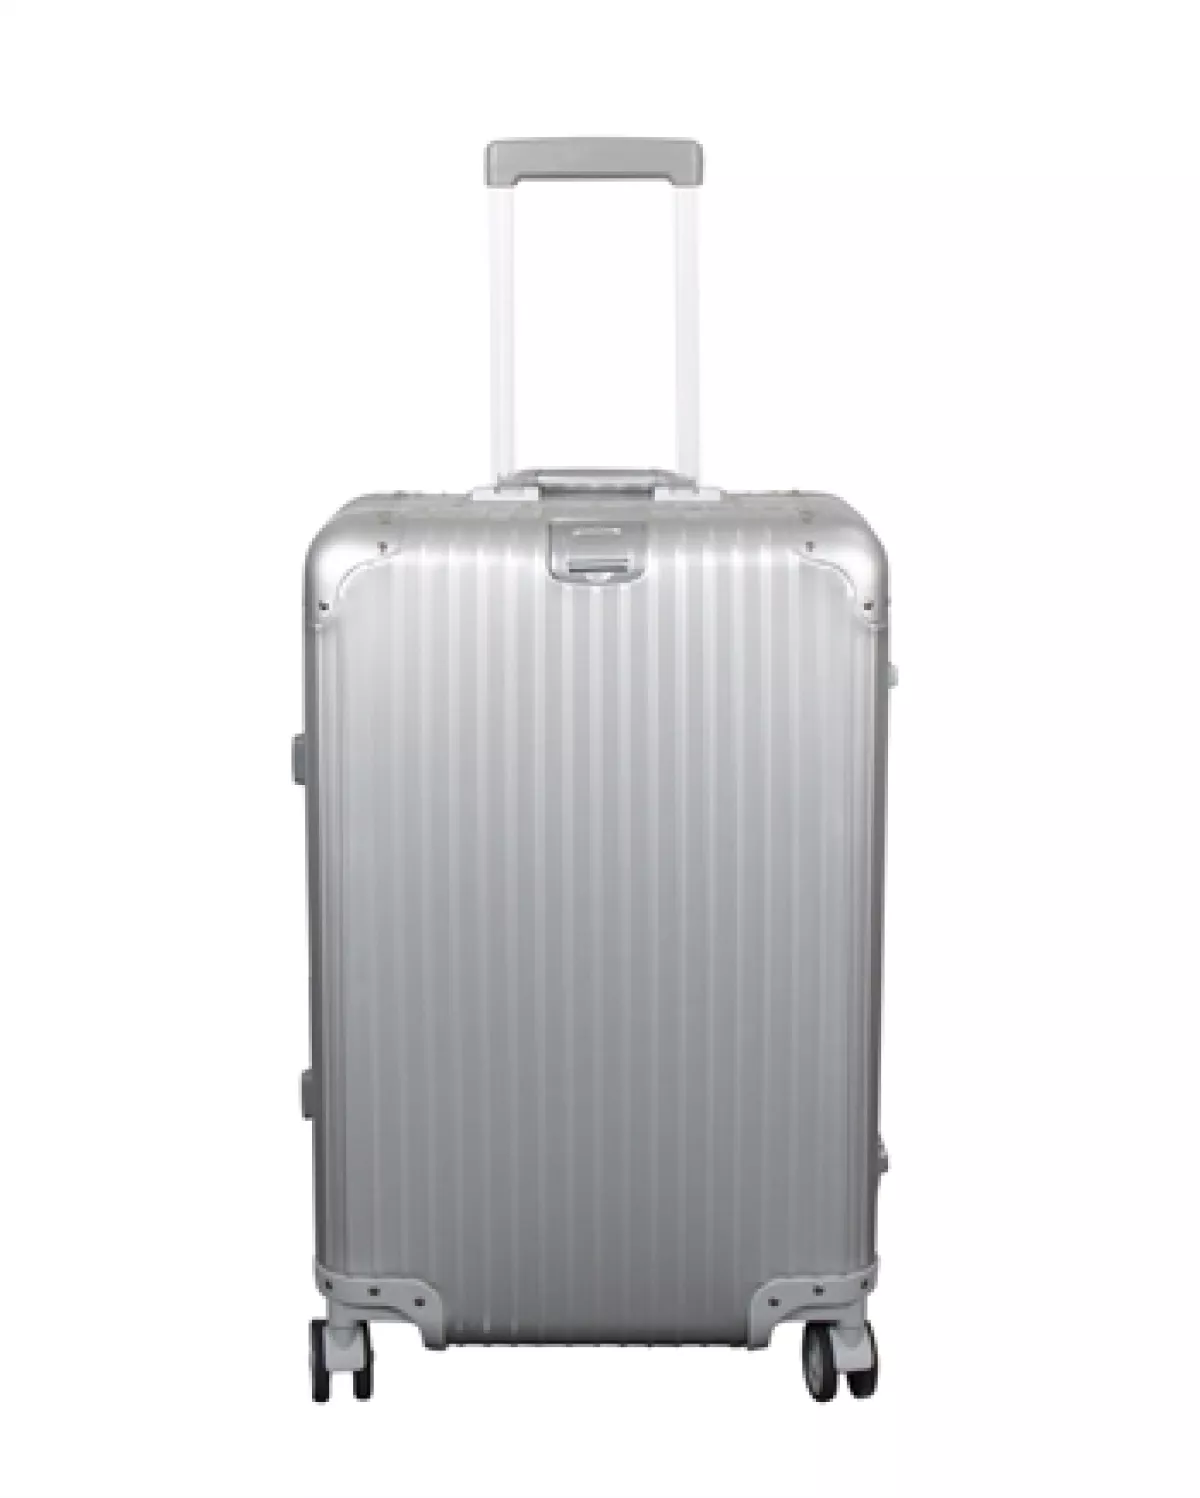 #3 - Aluminiums kuffert - Sølv farvet - 68 liter - Luksuriøs rejsekuffert med TSA lås